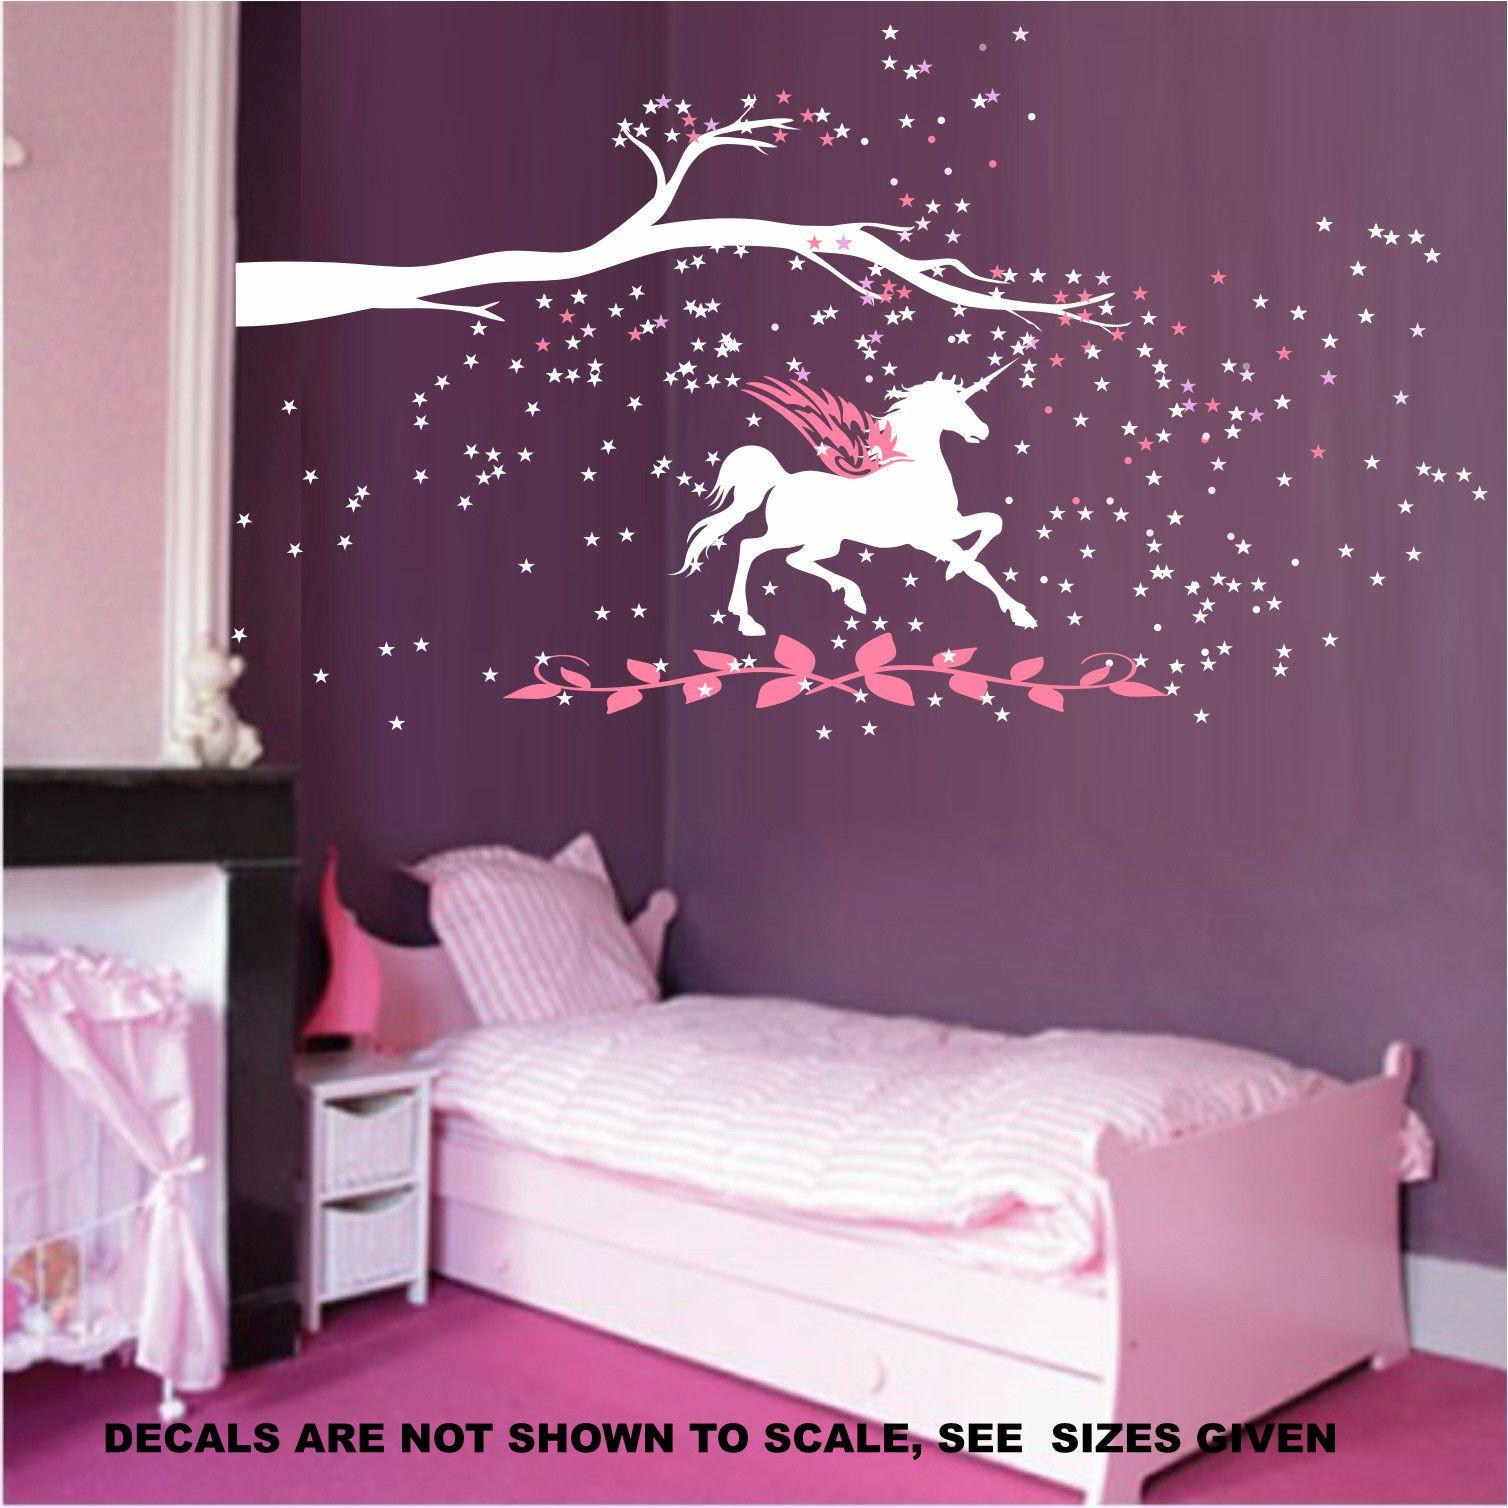 Girl Bedroom Wall Art
 Unicorn fantasy girls bedroom wall art sticker vinyl decal